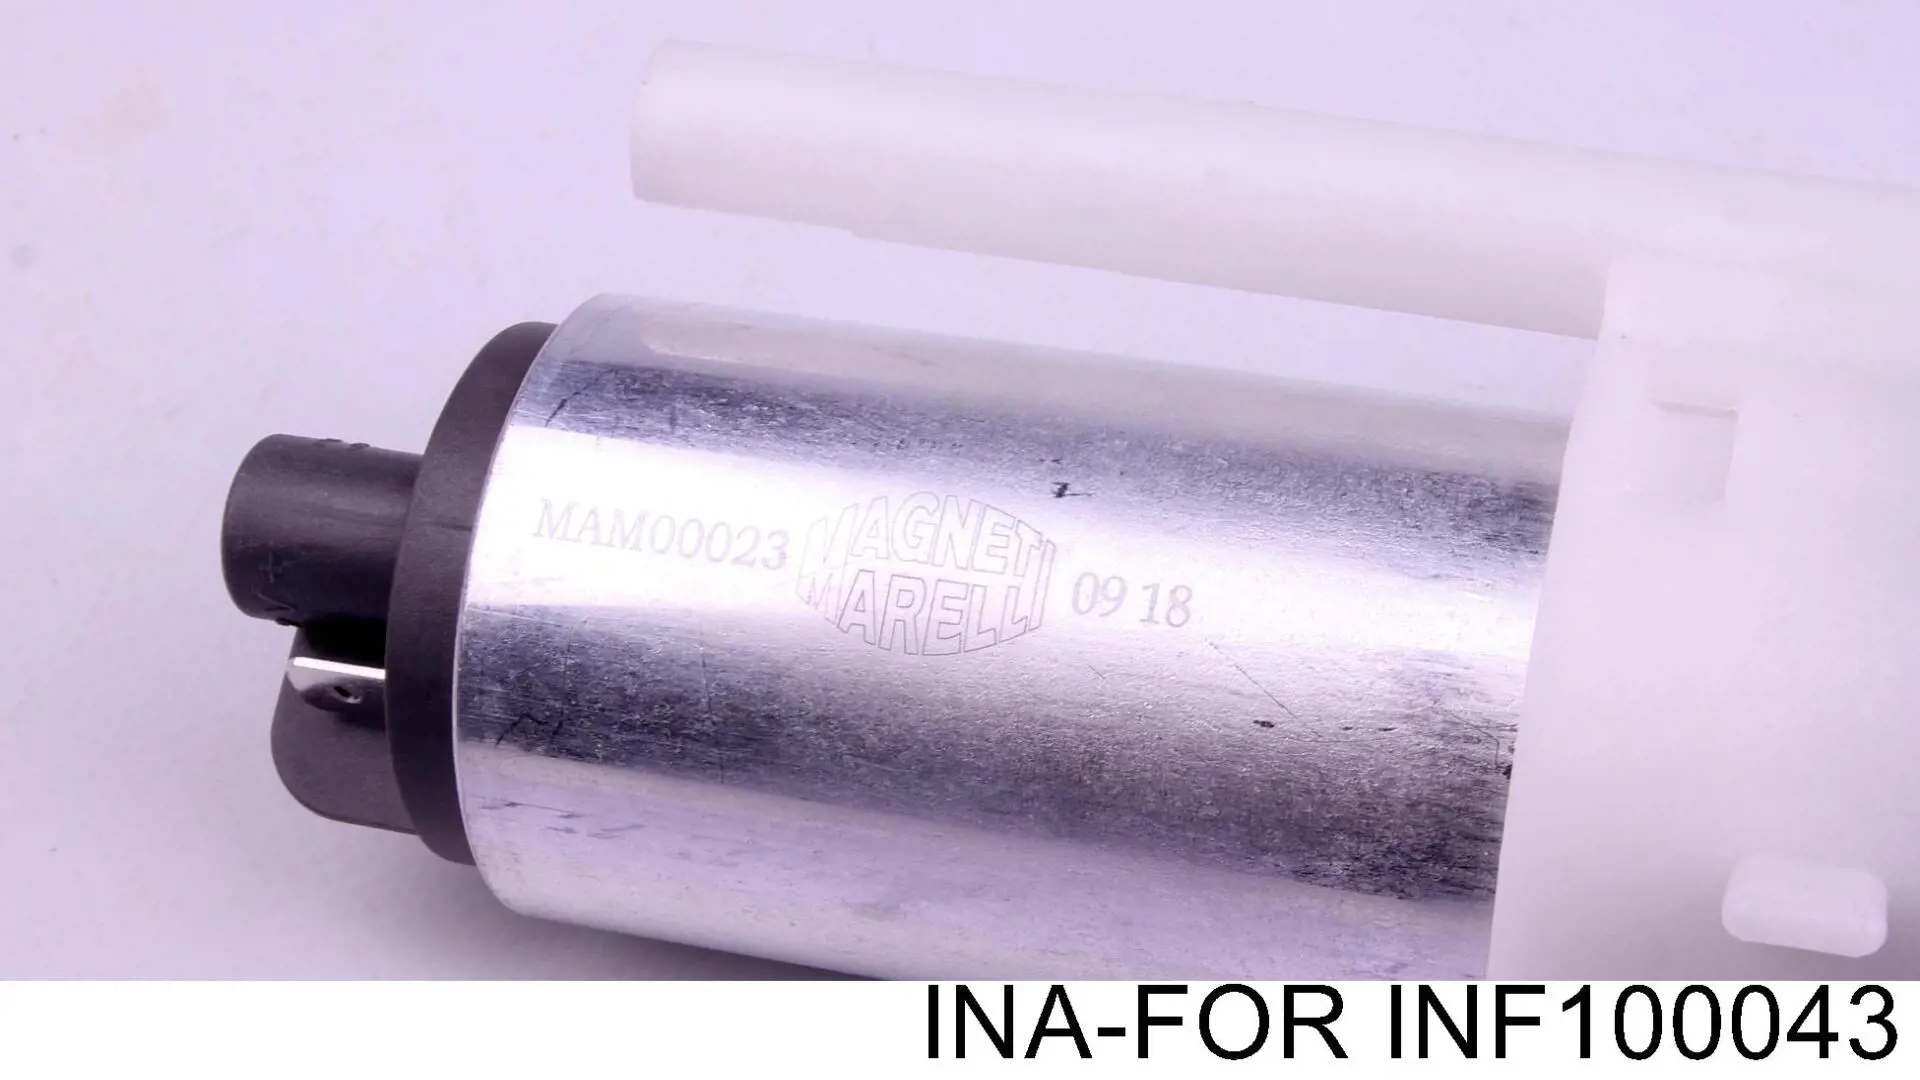 INF10.0043 InA-For элемент-турбинка топливного насоса